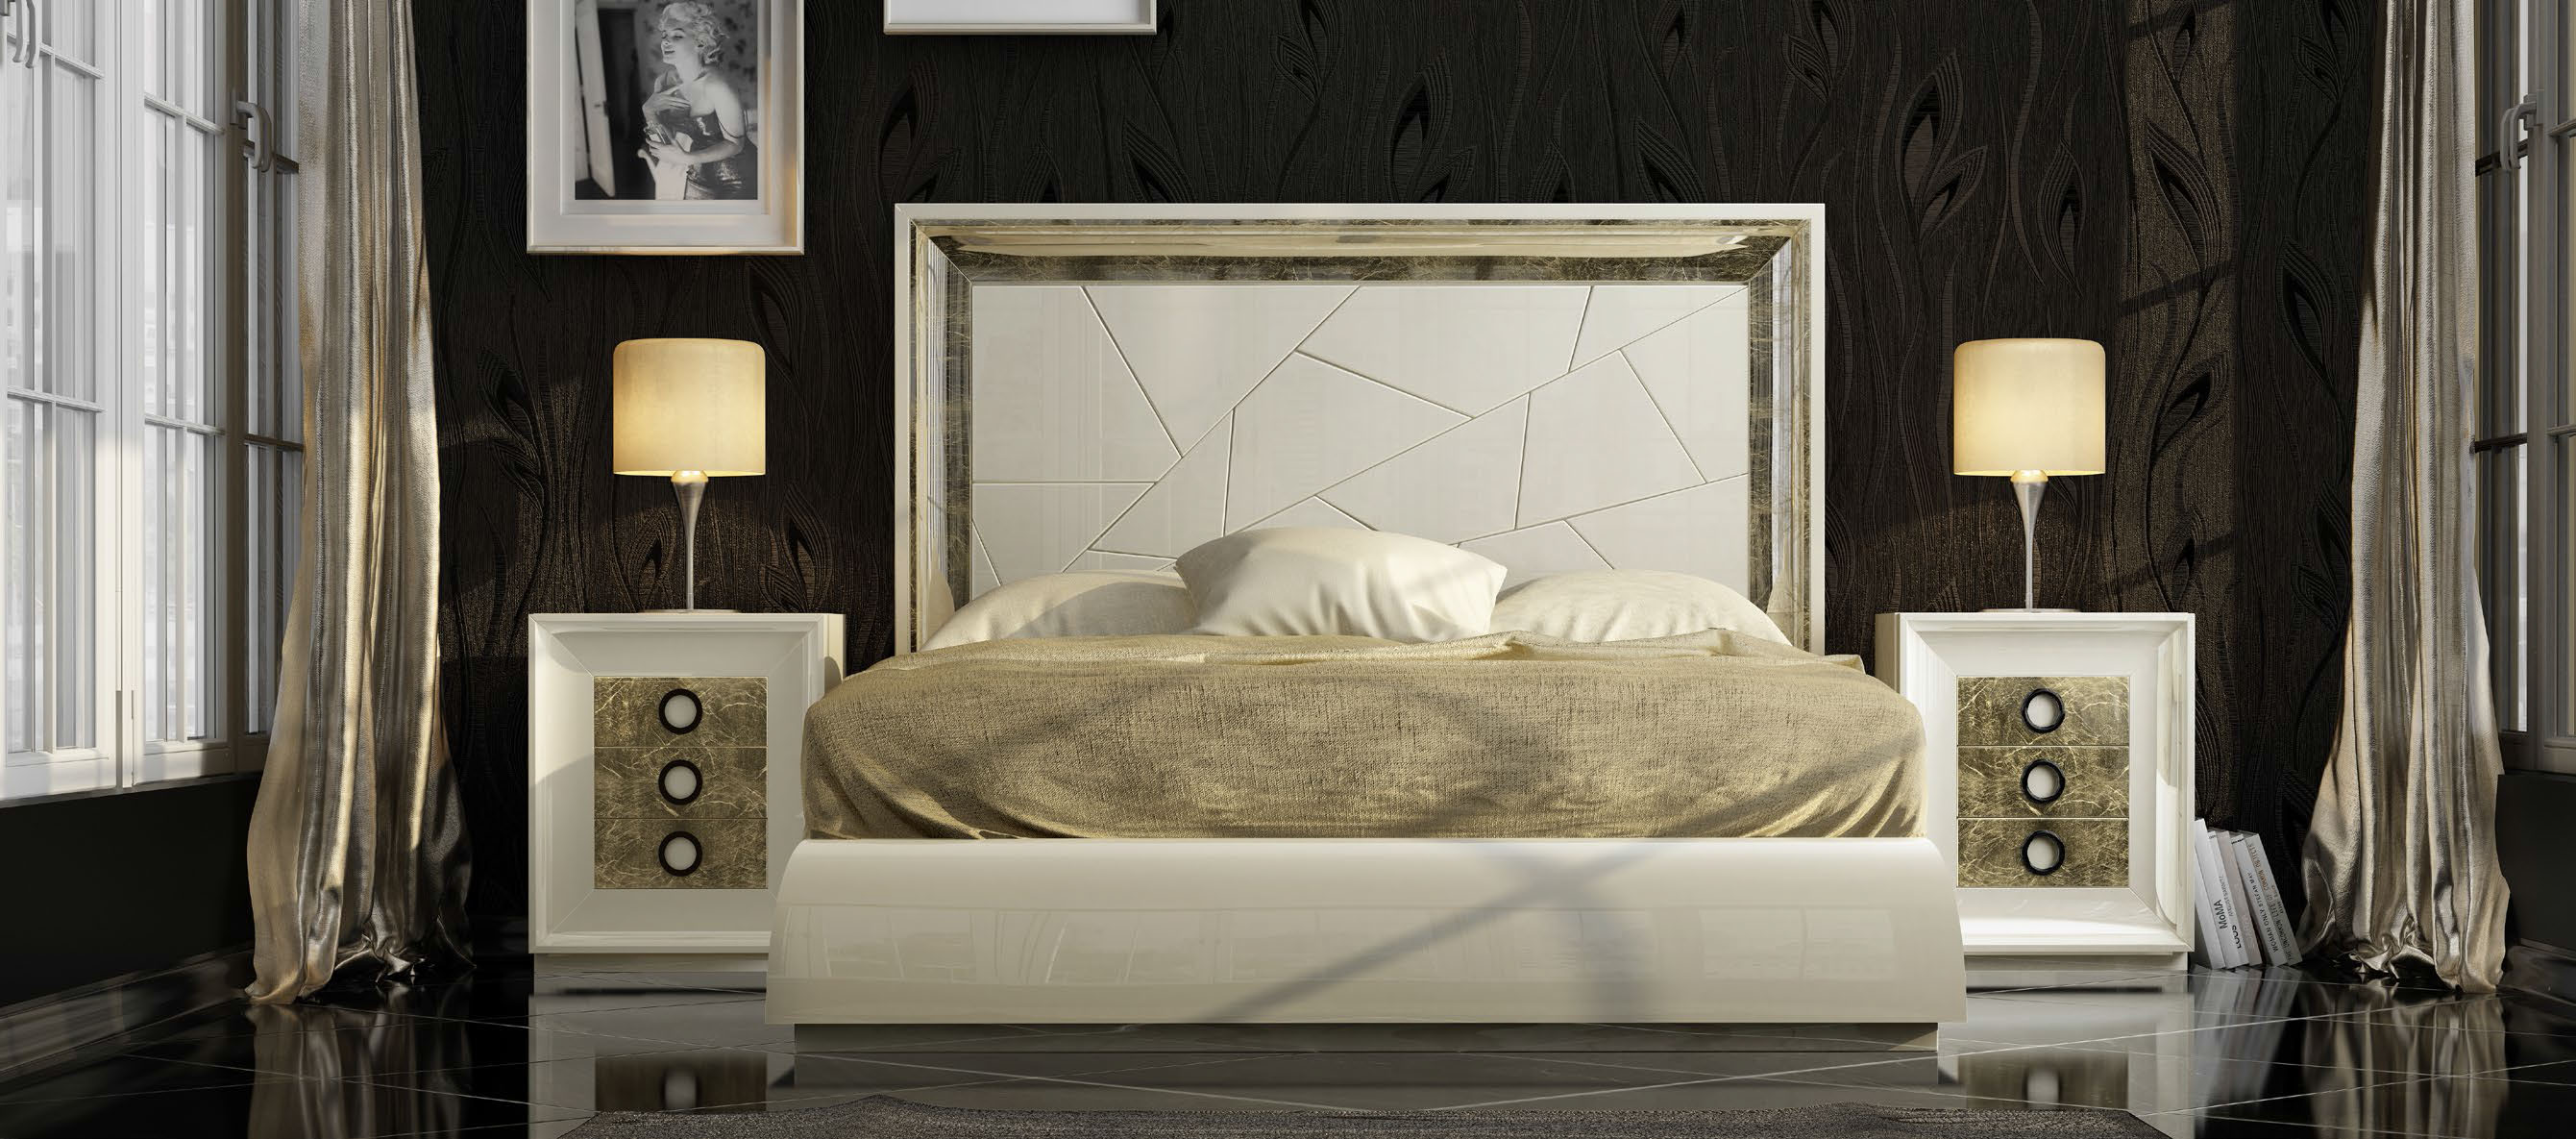 Brands Franco Furniture Bedrooms vol3, Spain DOR 97